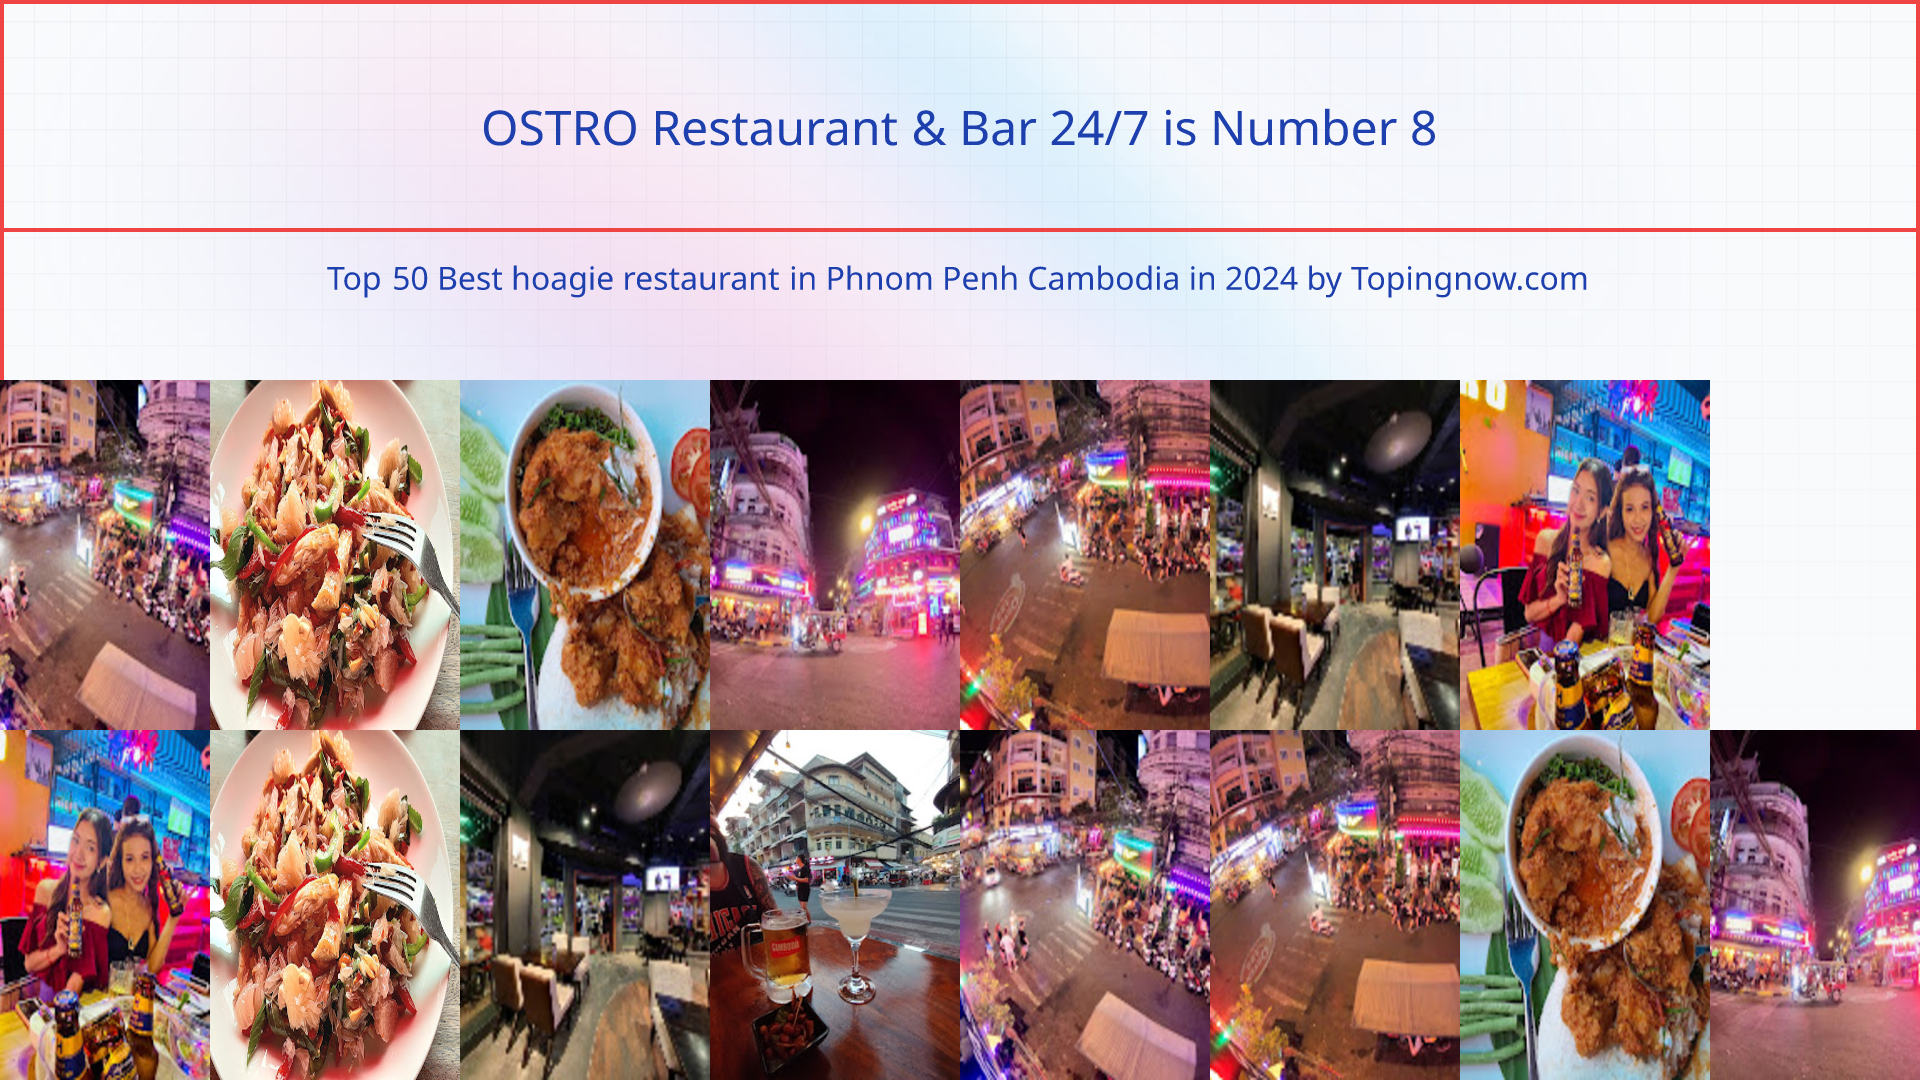 OSTRO Restaurant & Bar 24/7: Top 50 Best hoagie restaurant in Phnom Penh Cambodia in 2024